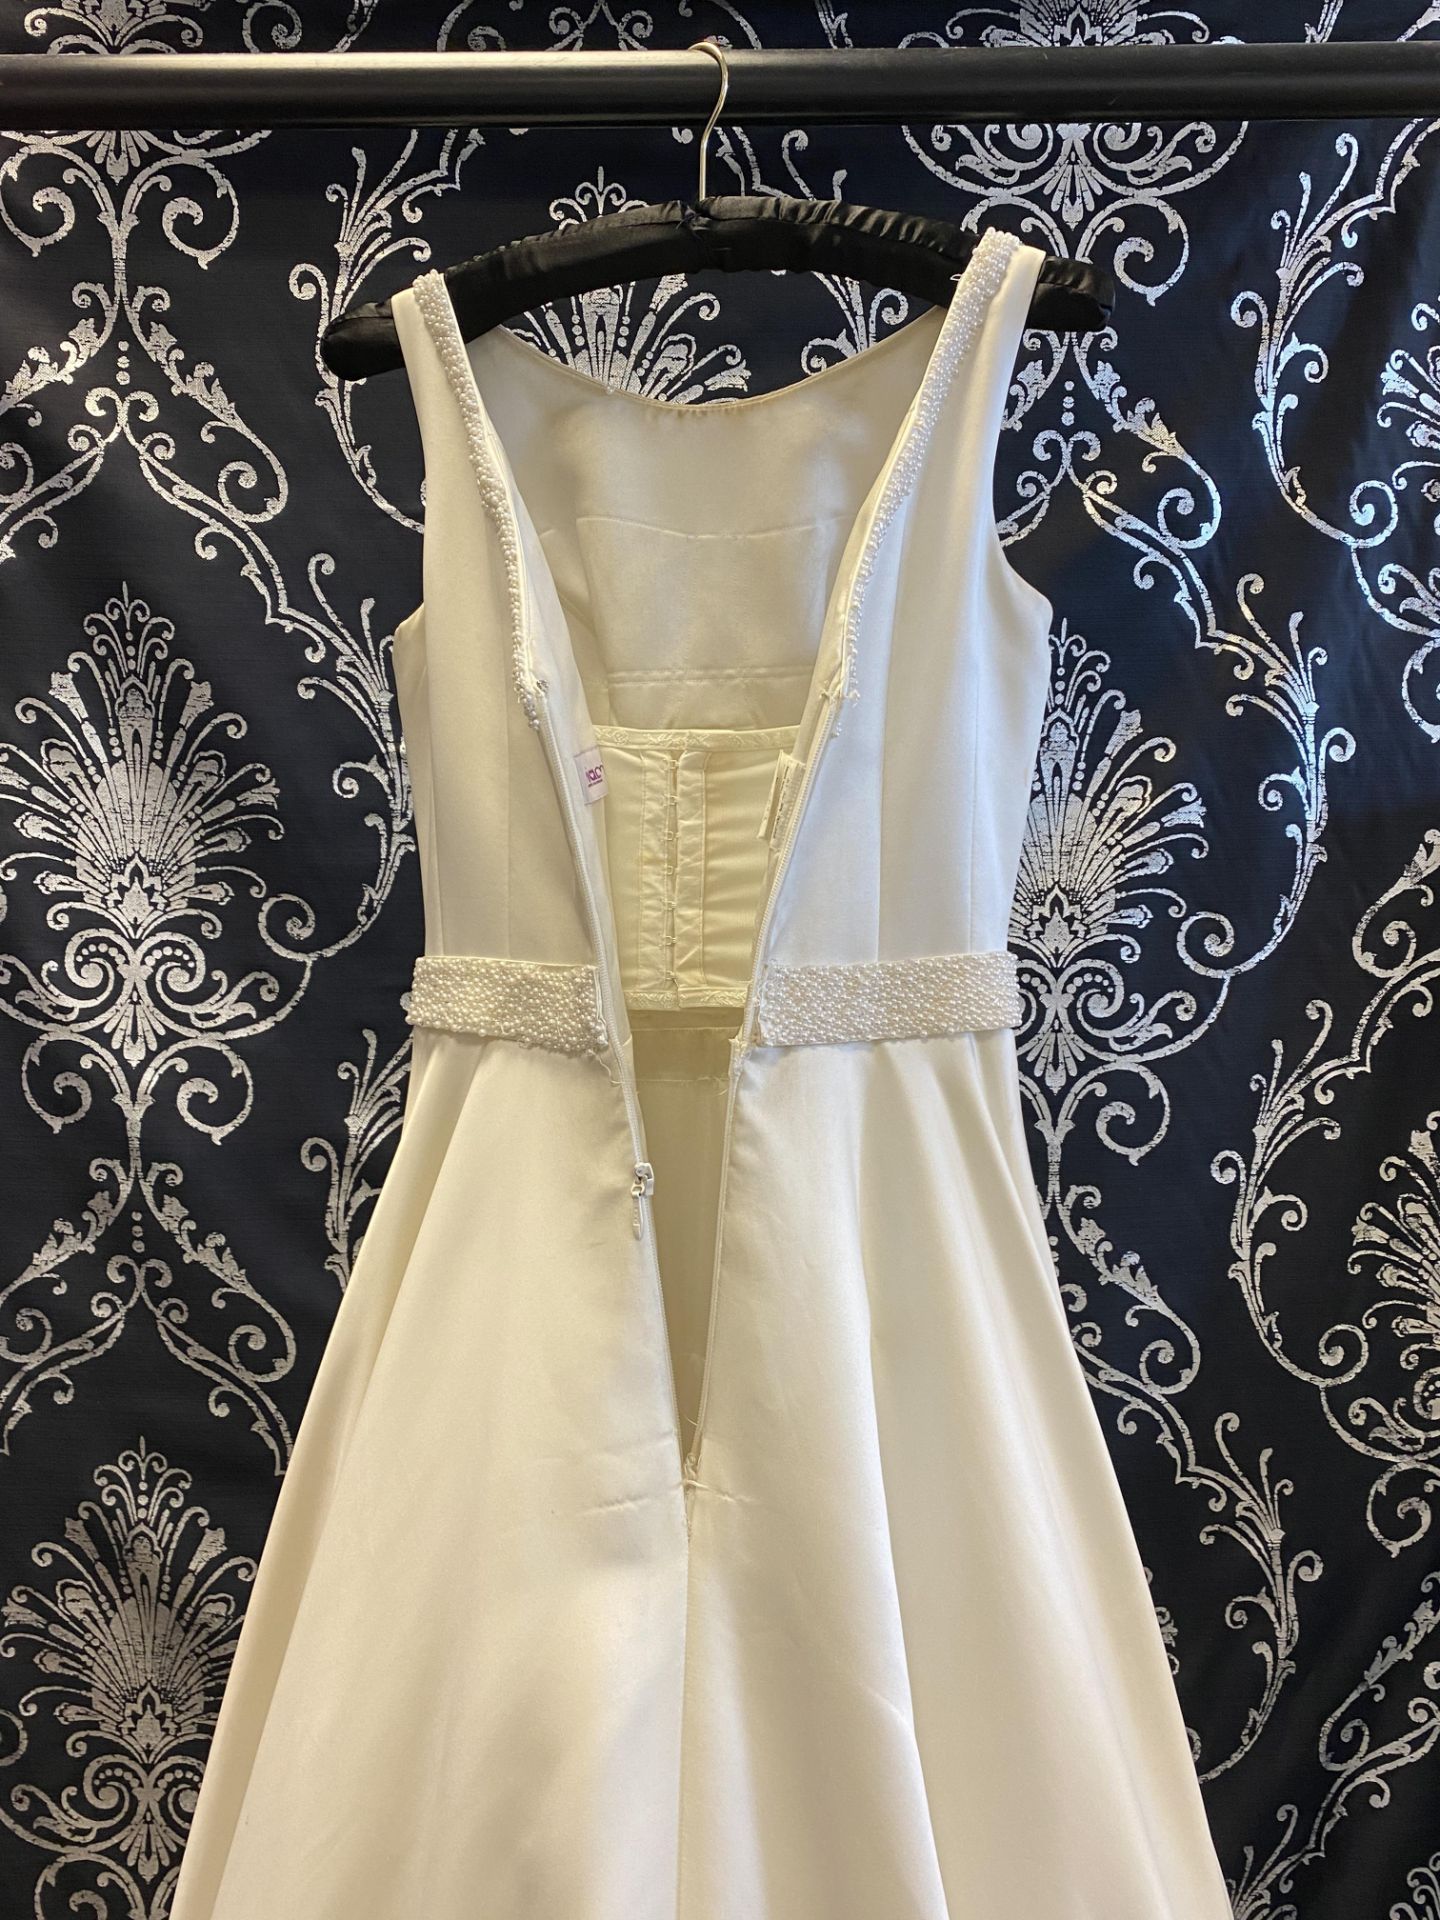 1 x MIA MIA 'Estelle' Timeless Satin Empire Line Designer Wedding Dress Bridal Gown RRP£1,000 UK12 - Image 6 of 8